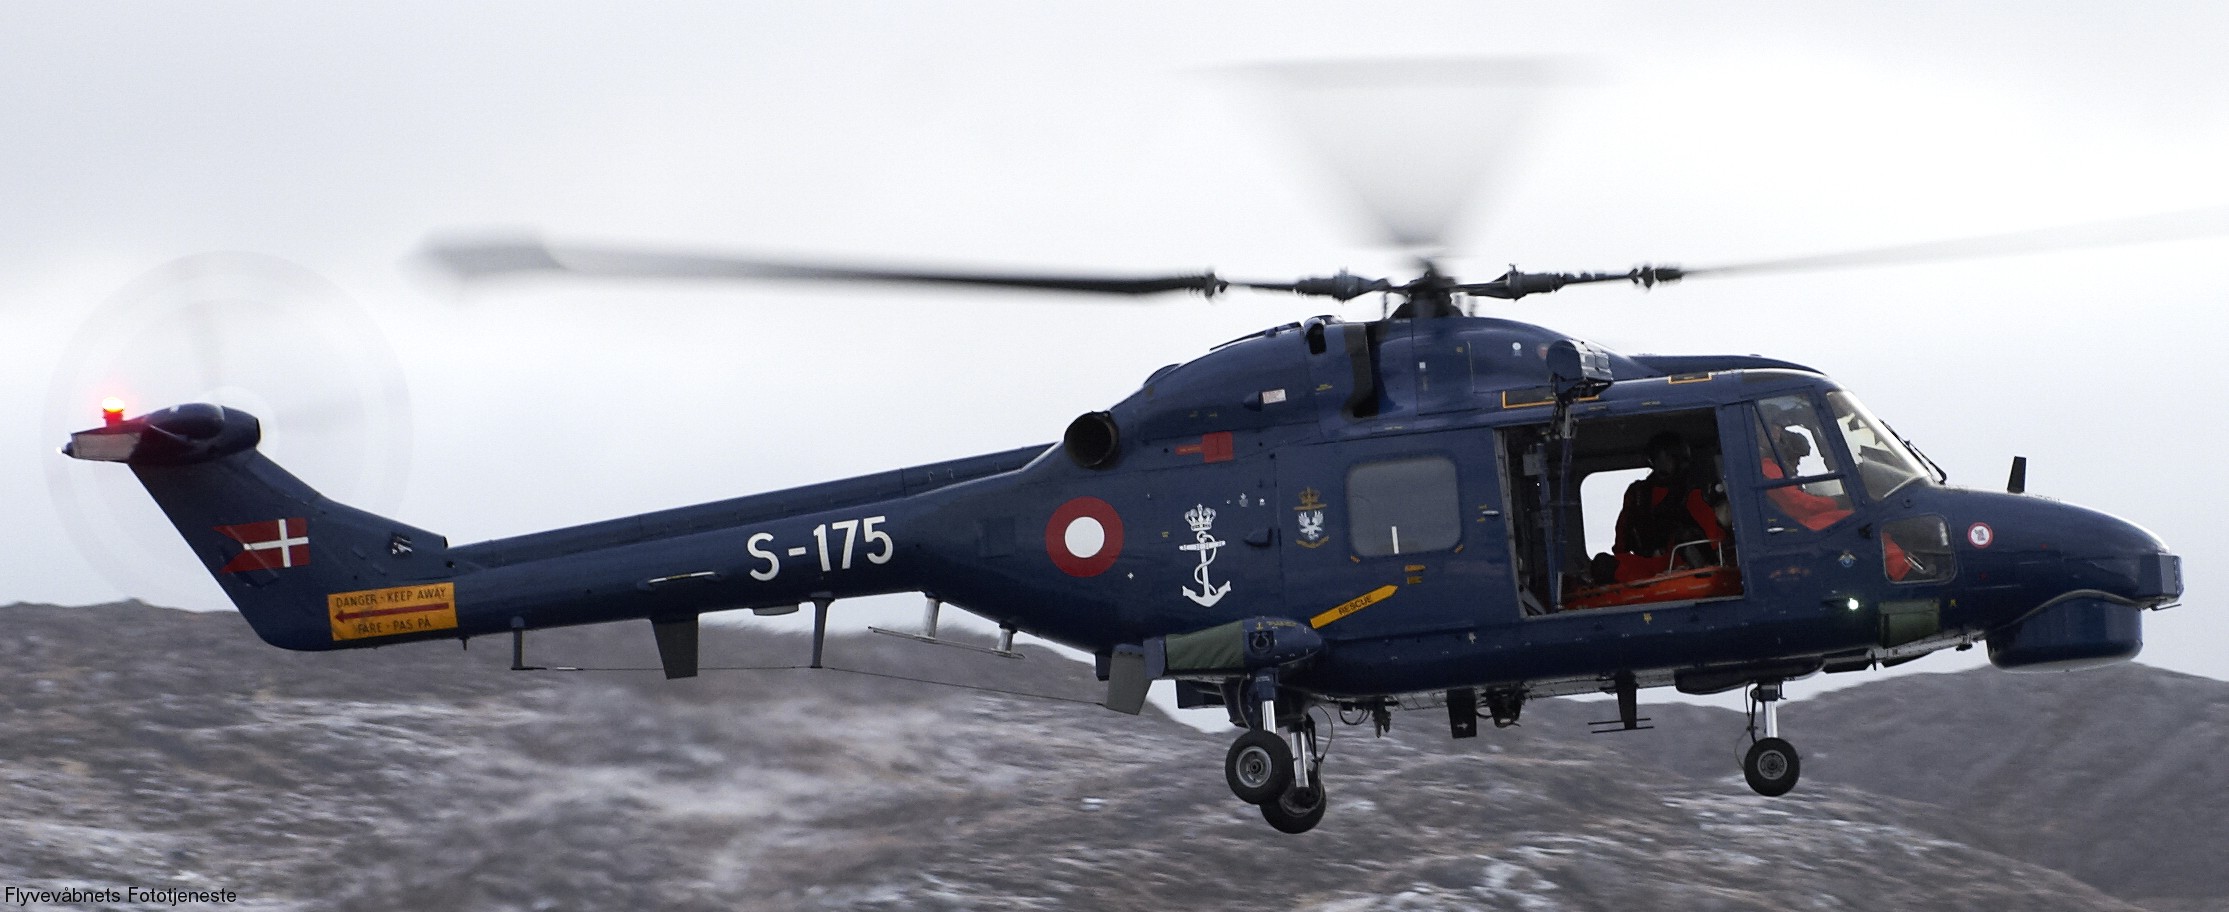 lynx mk.80 mk.90b helicopter westland royal danish navy air force kongelige danske marine flyvevabnet s-175 13